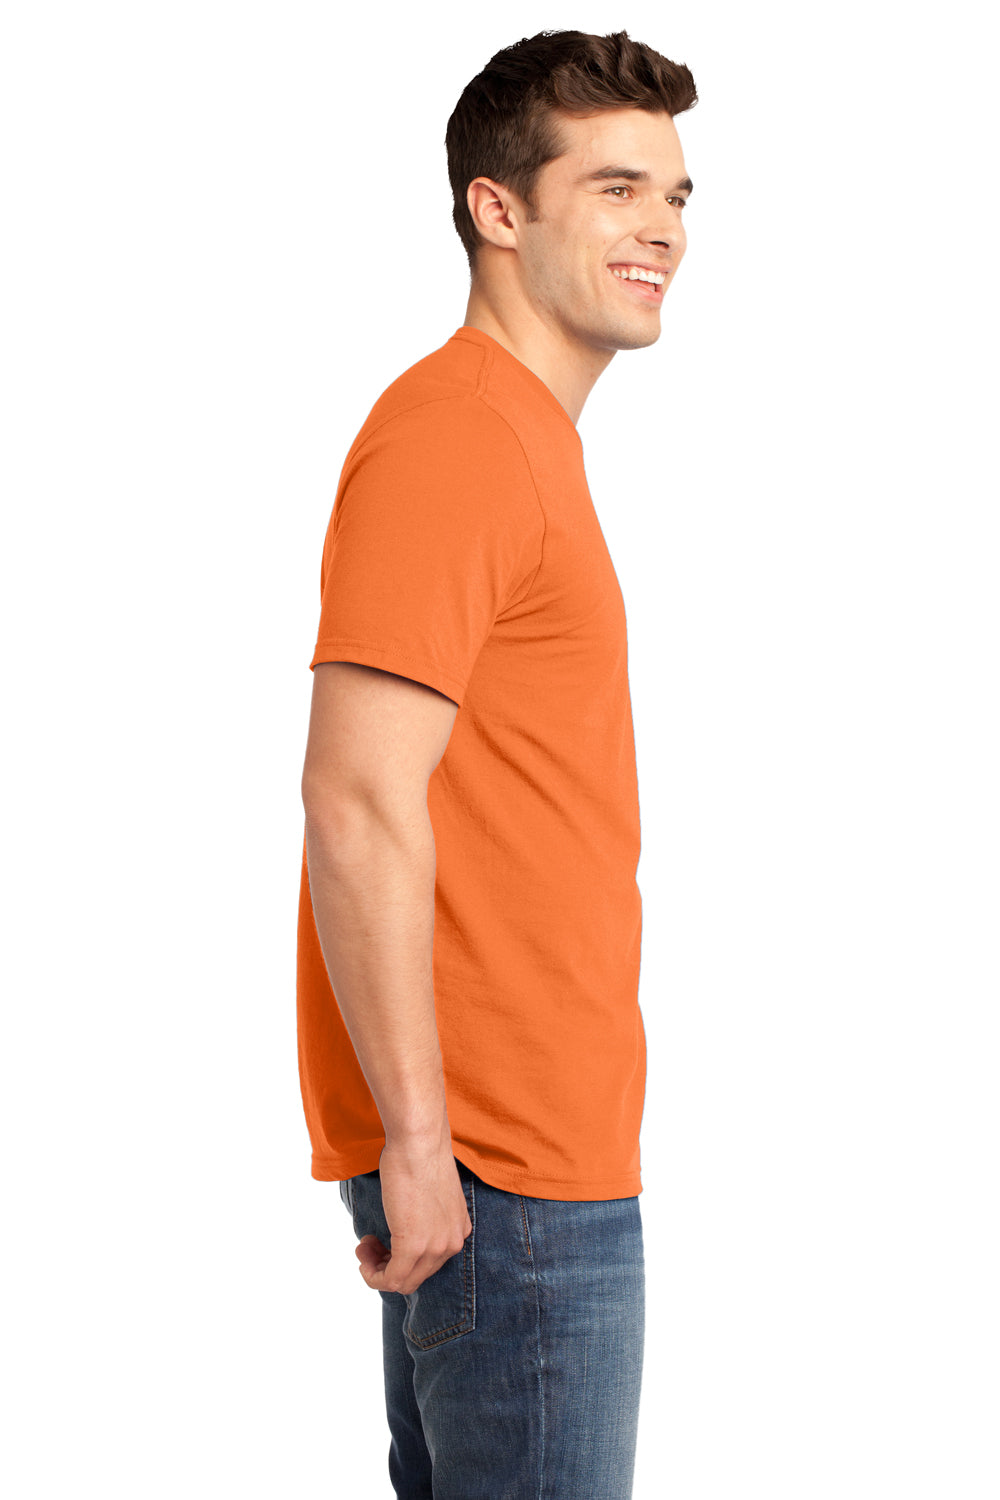 District DT6000 Mens Very Important Short Sleeve Crewneck T-Shirt Orange Side